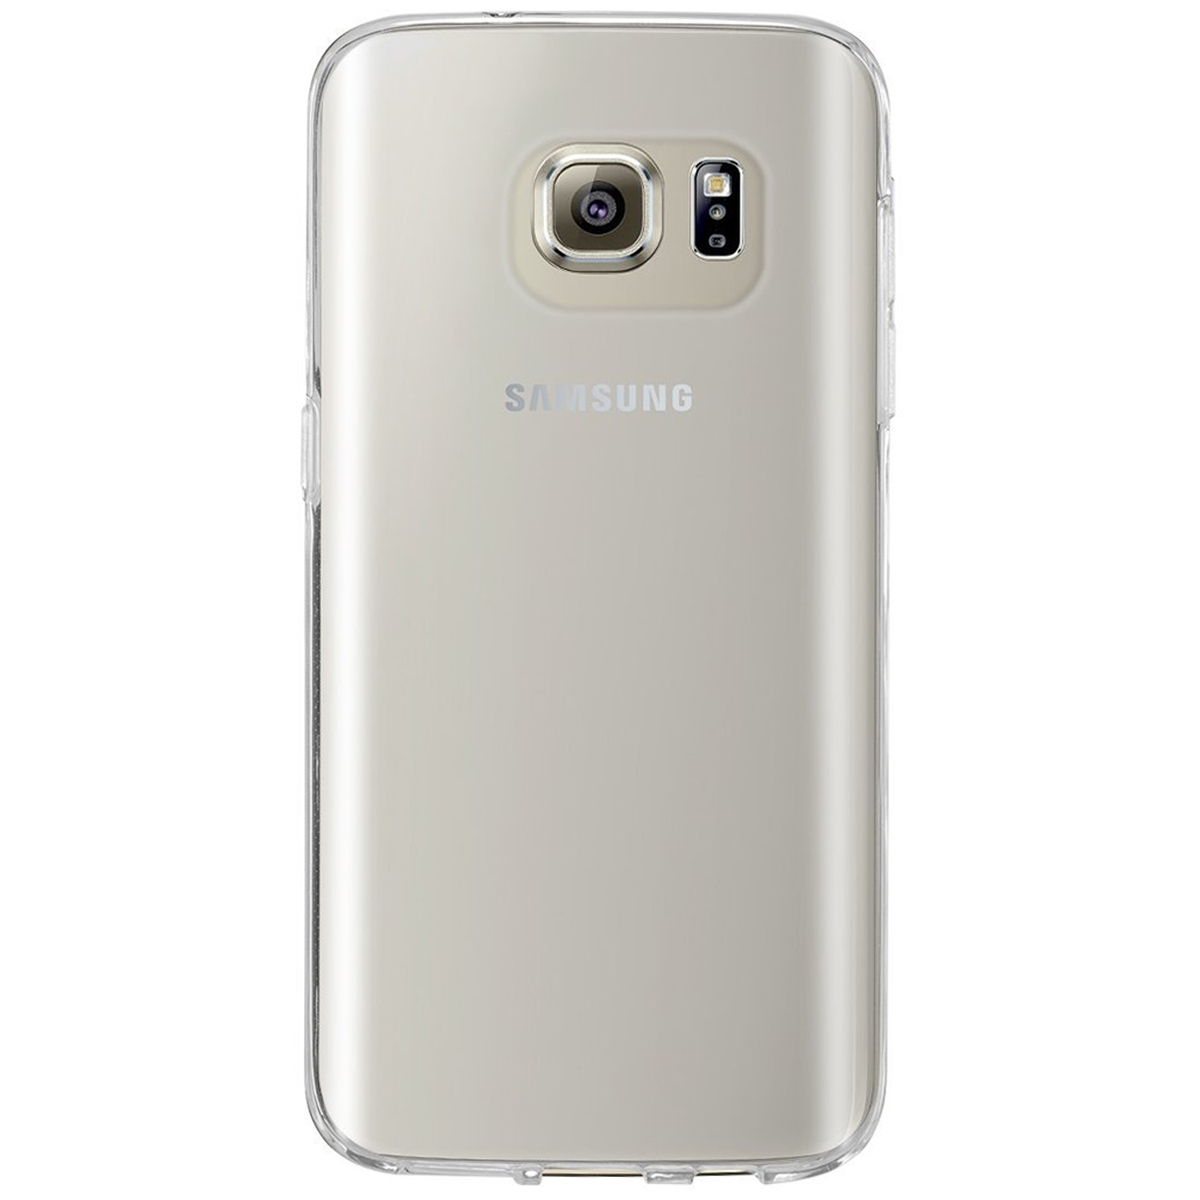 Base High Gloss TPU Case Samsung Galaxy S7 - Clear (OLD VERSION)